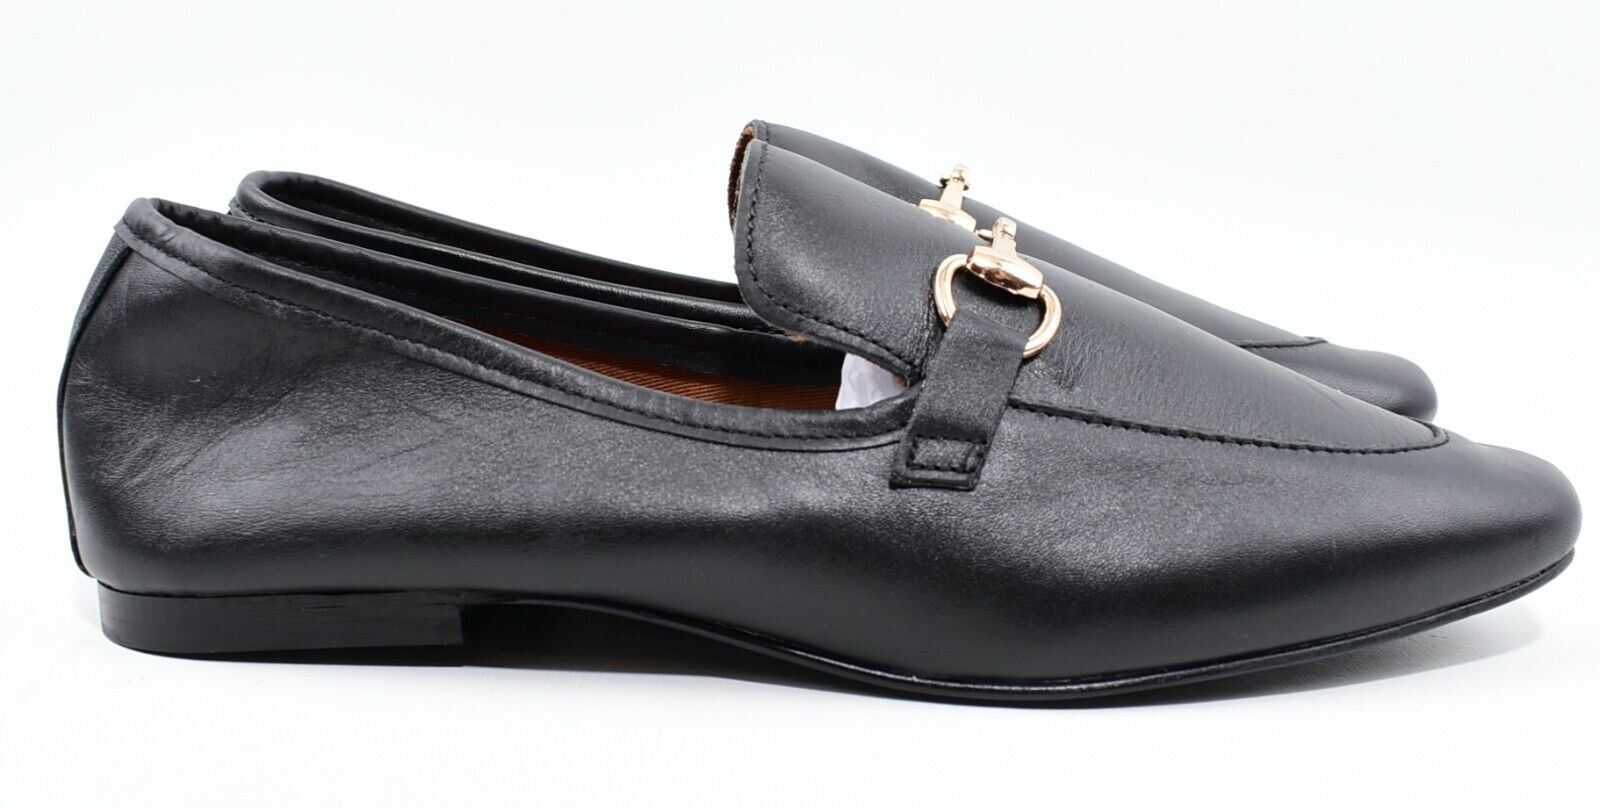 A PIEDI Womens Genuine Leather Loafers Shoes, Black, size UK 6 / EU 39